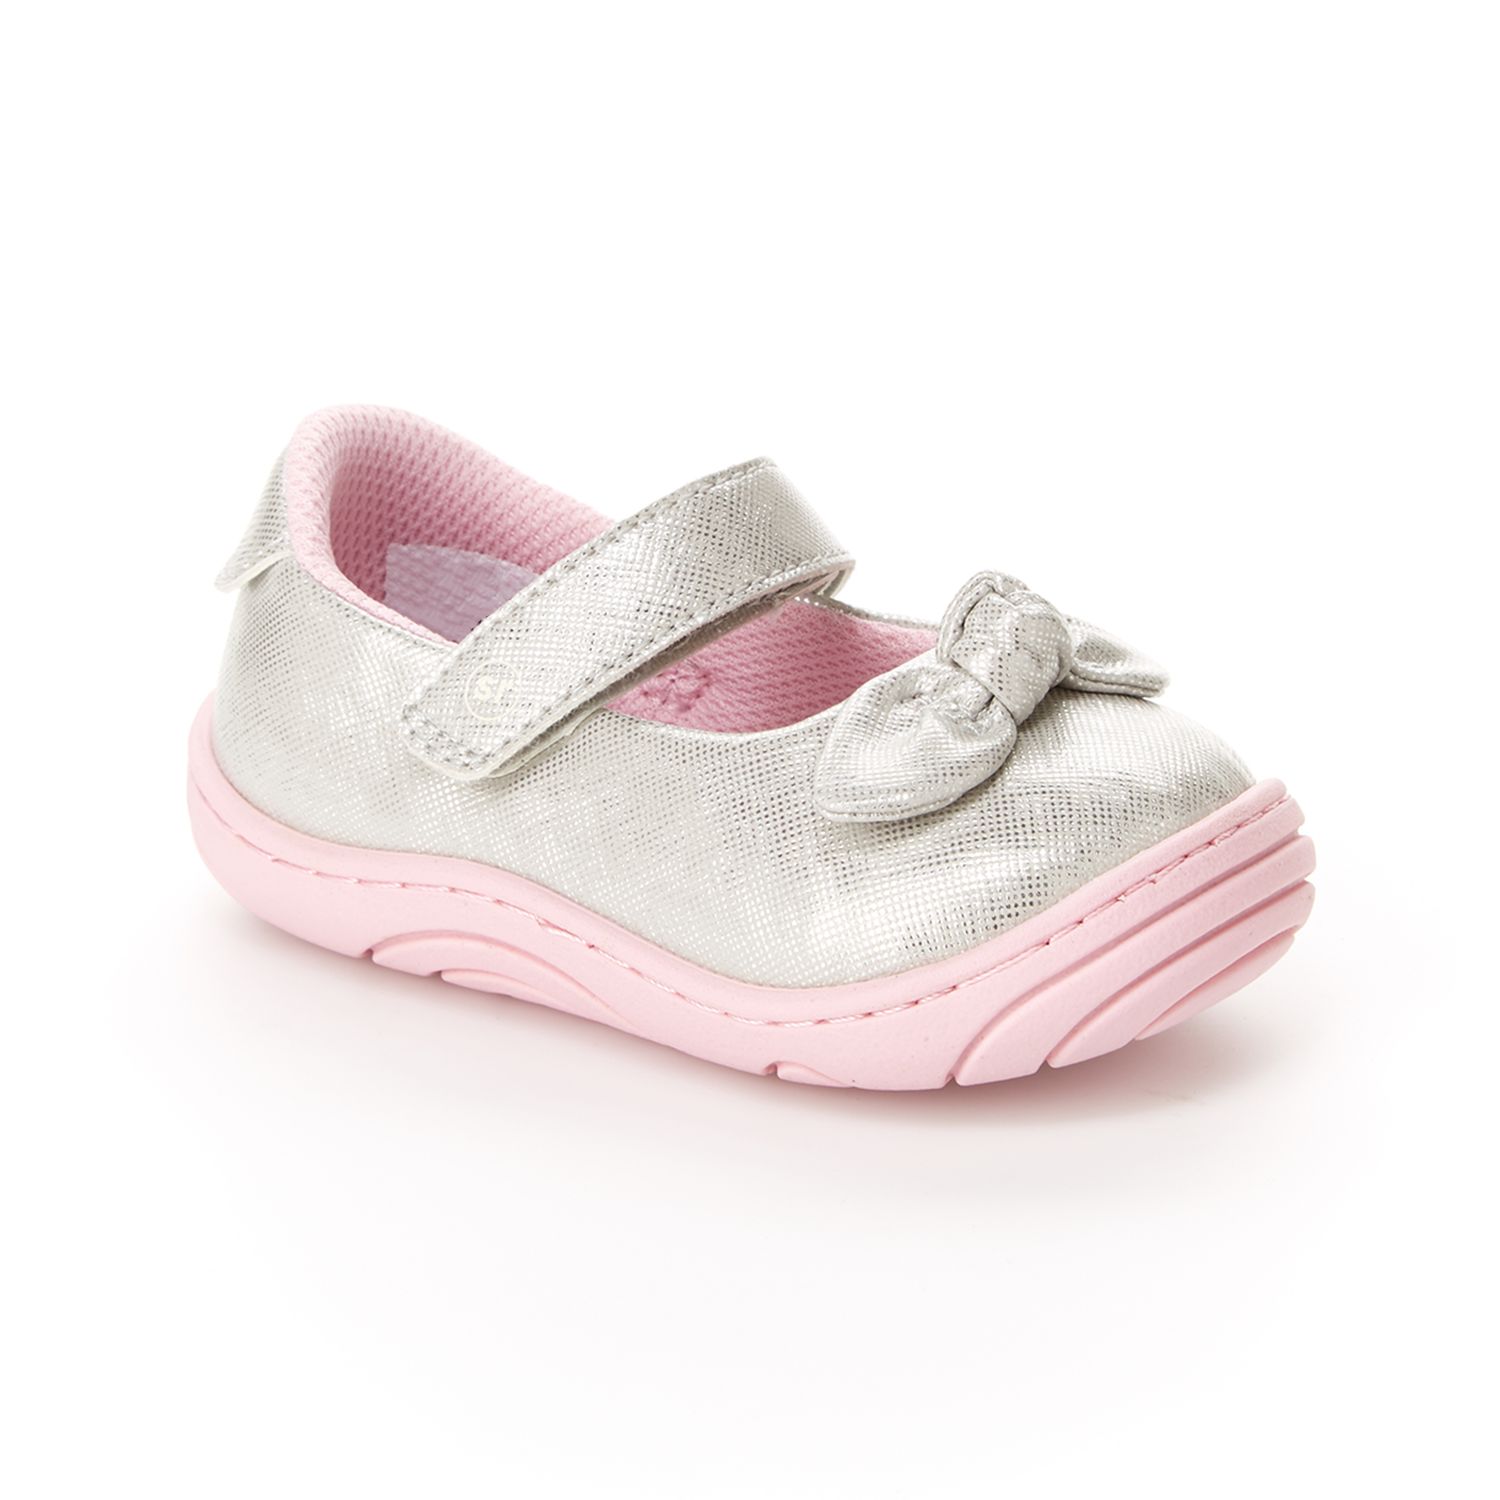 kohls shoes baby girl